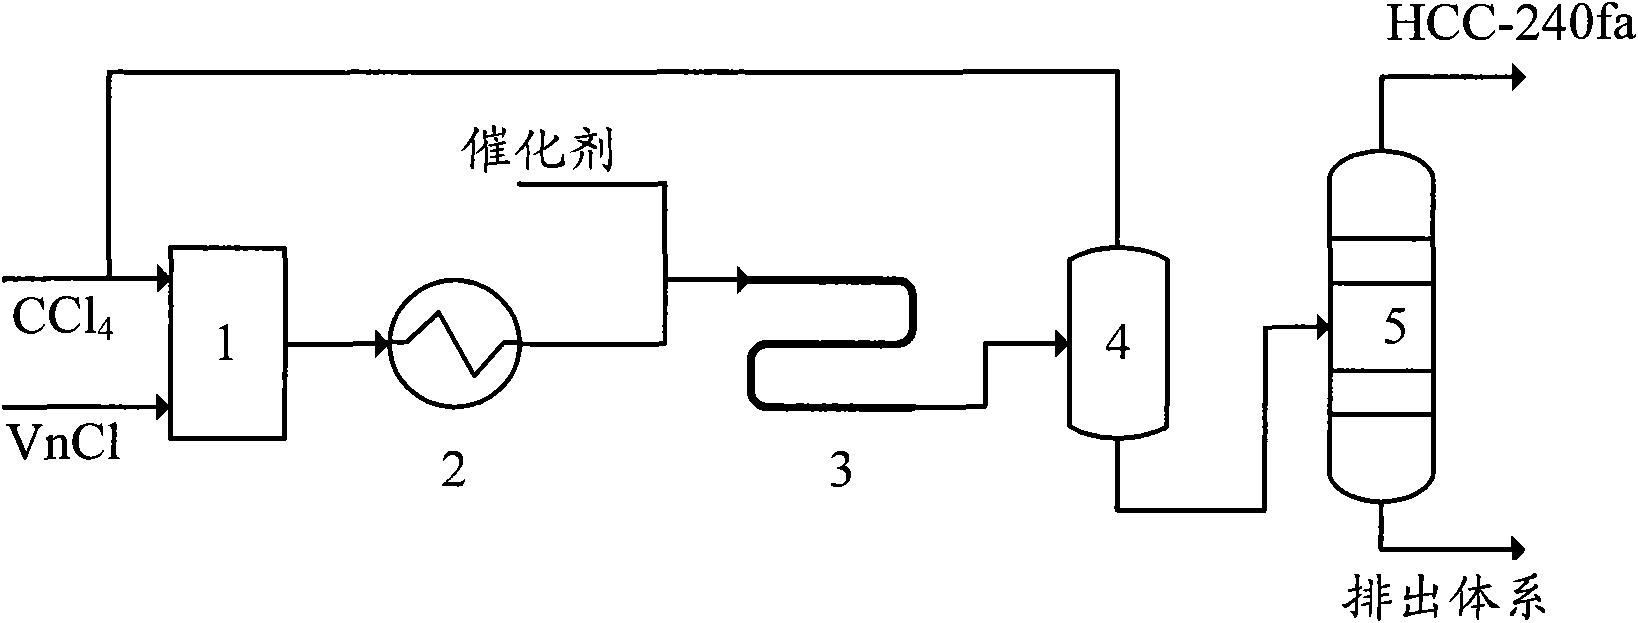 Production method of 1,1,1,3,3-pentachloropropane